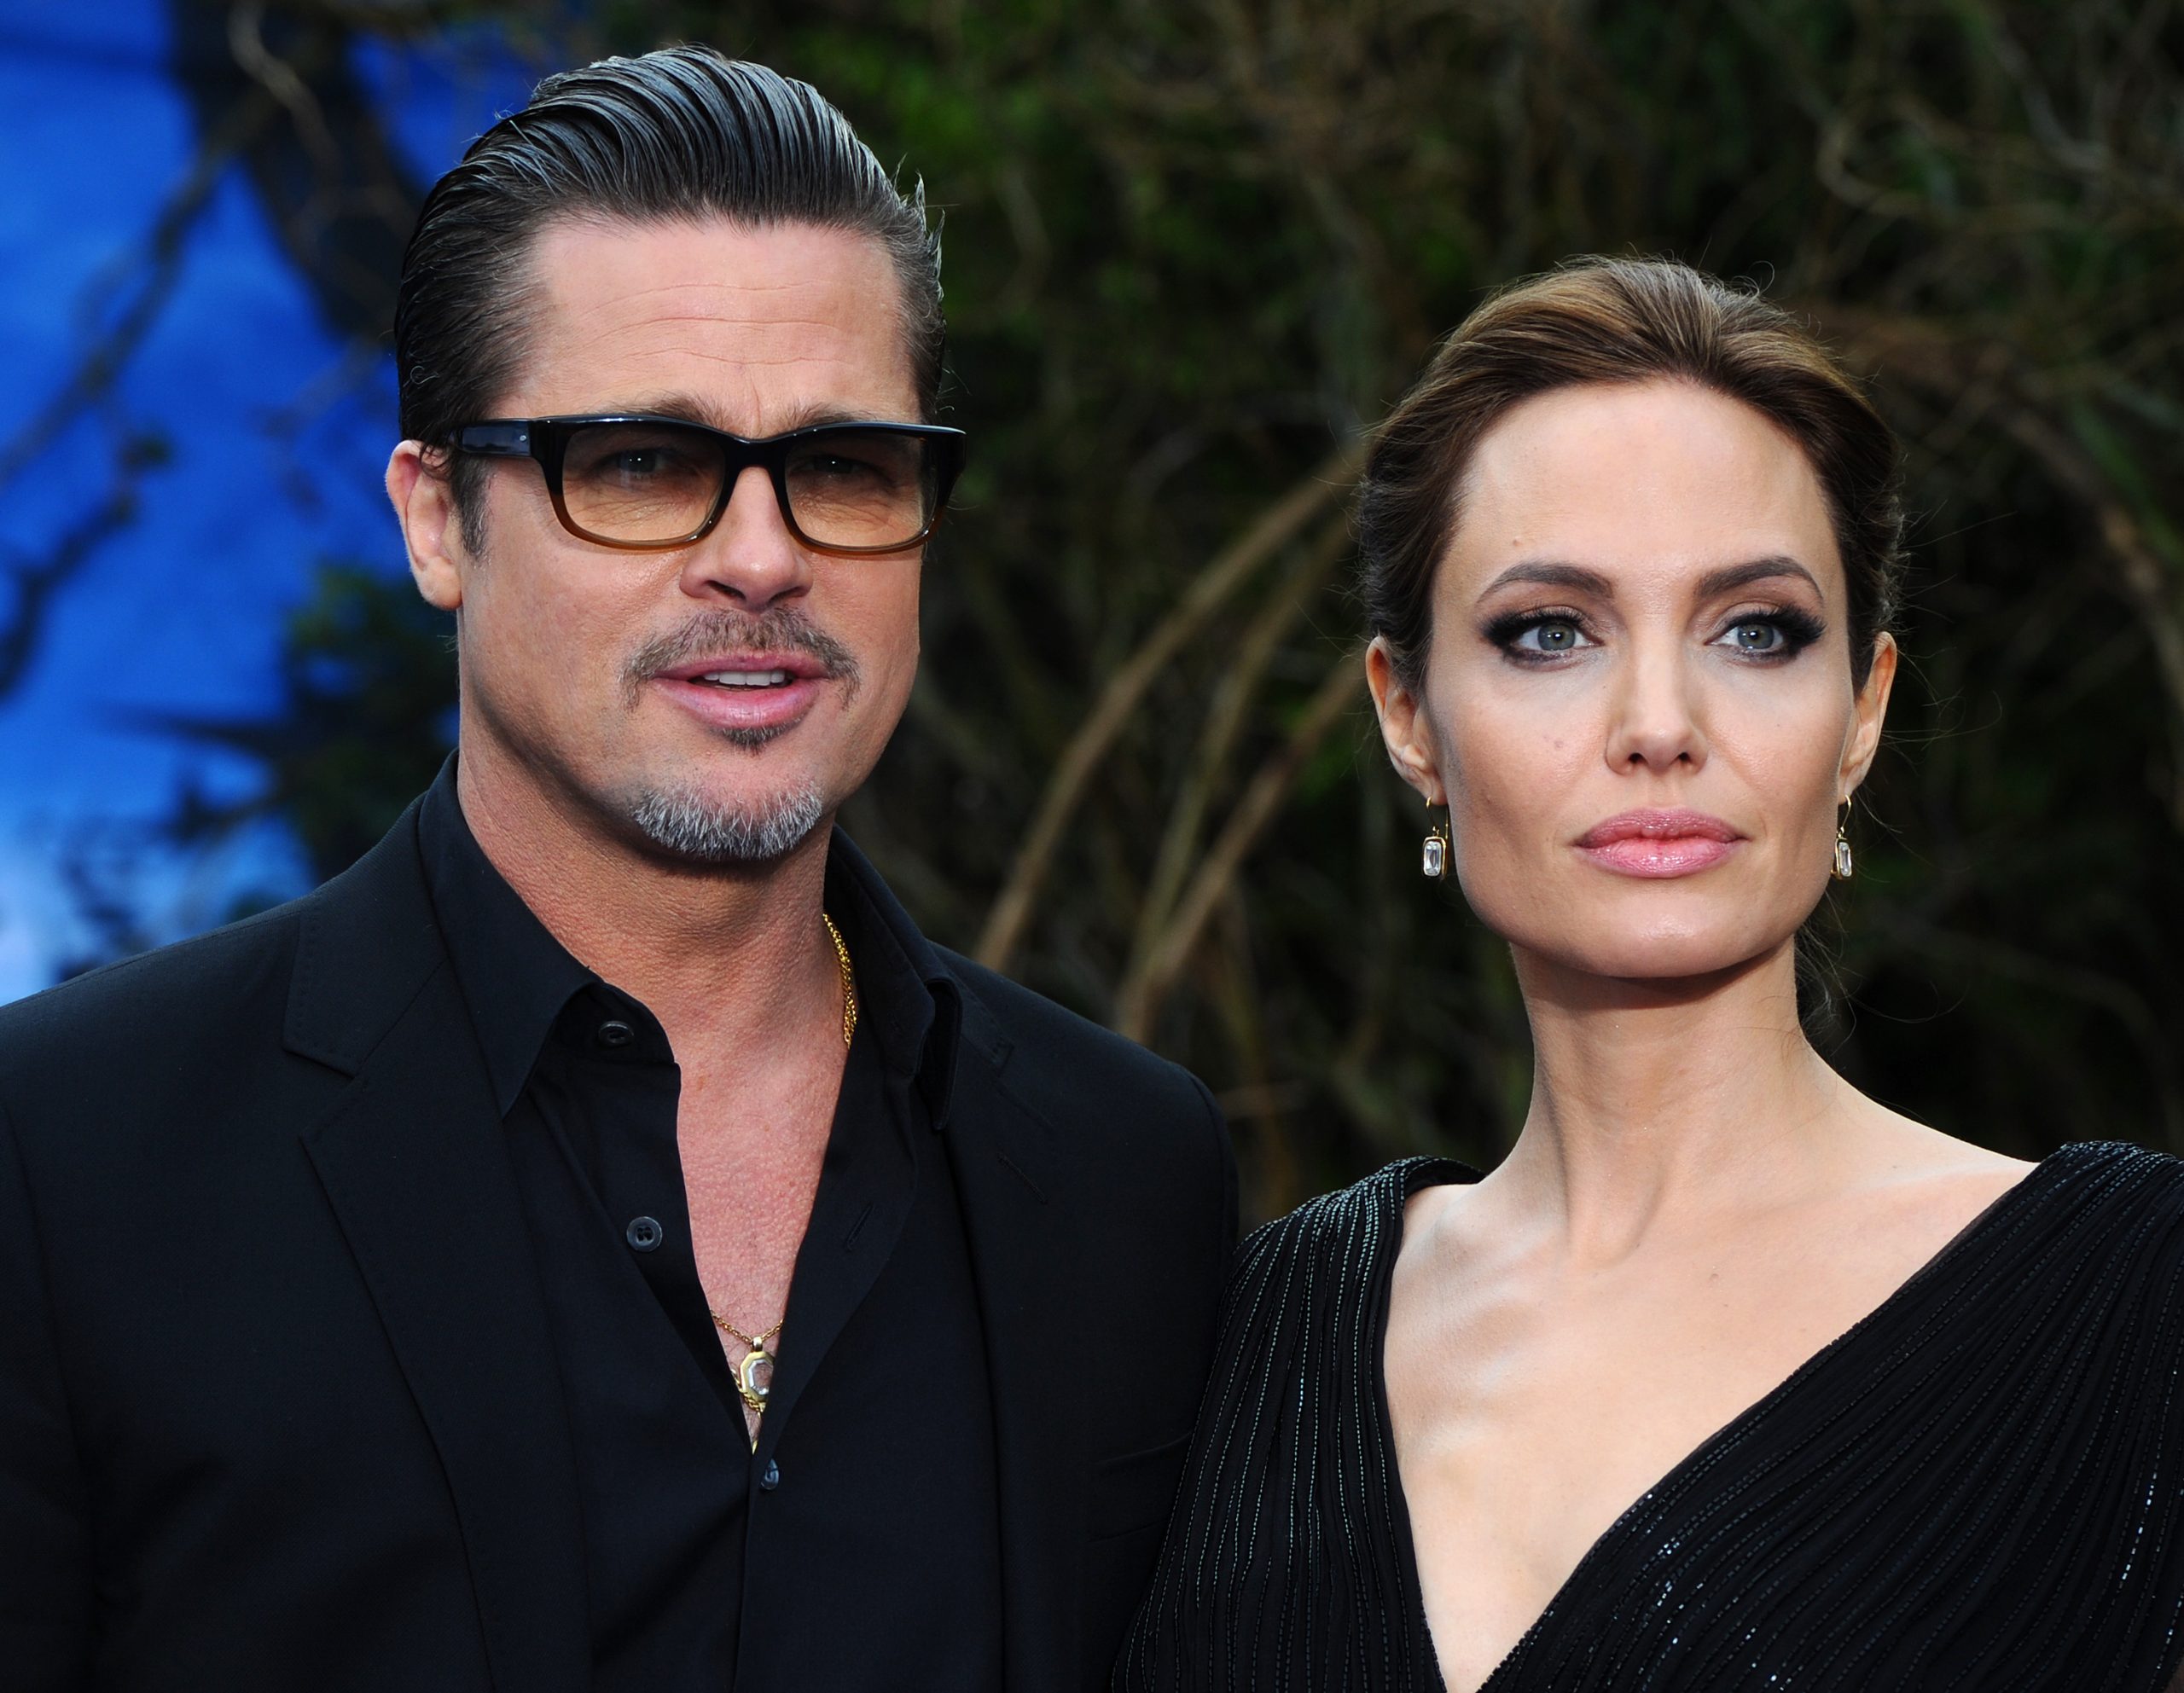 Angelina Jolie photo